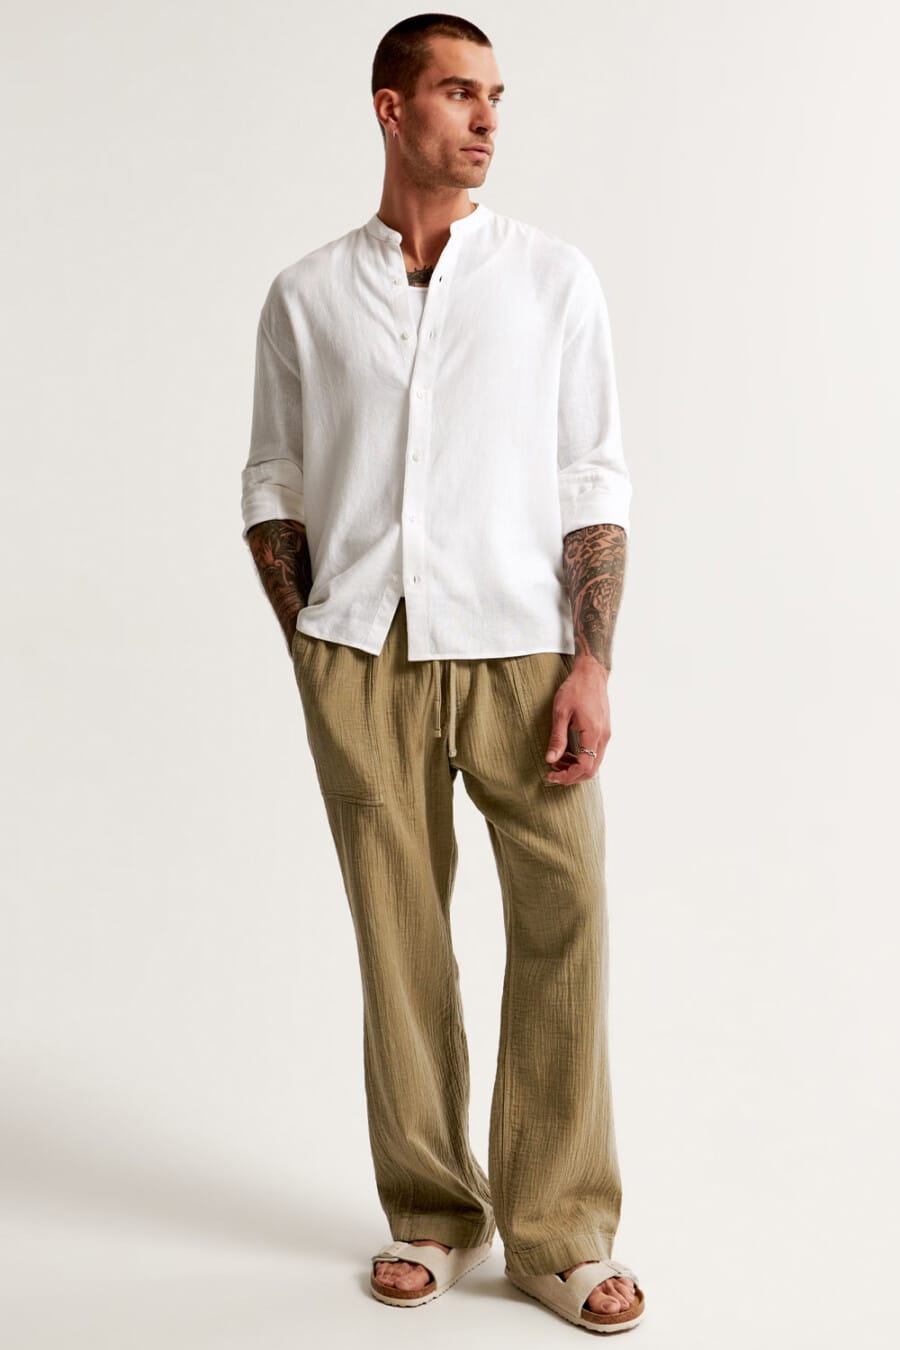 Men's loose khaki linen pants, white grandad/band collar shirt, white tank top and beige slider sandals outfit